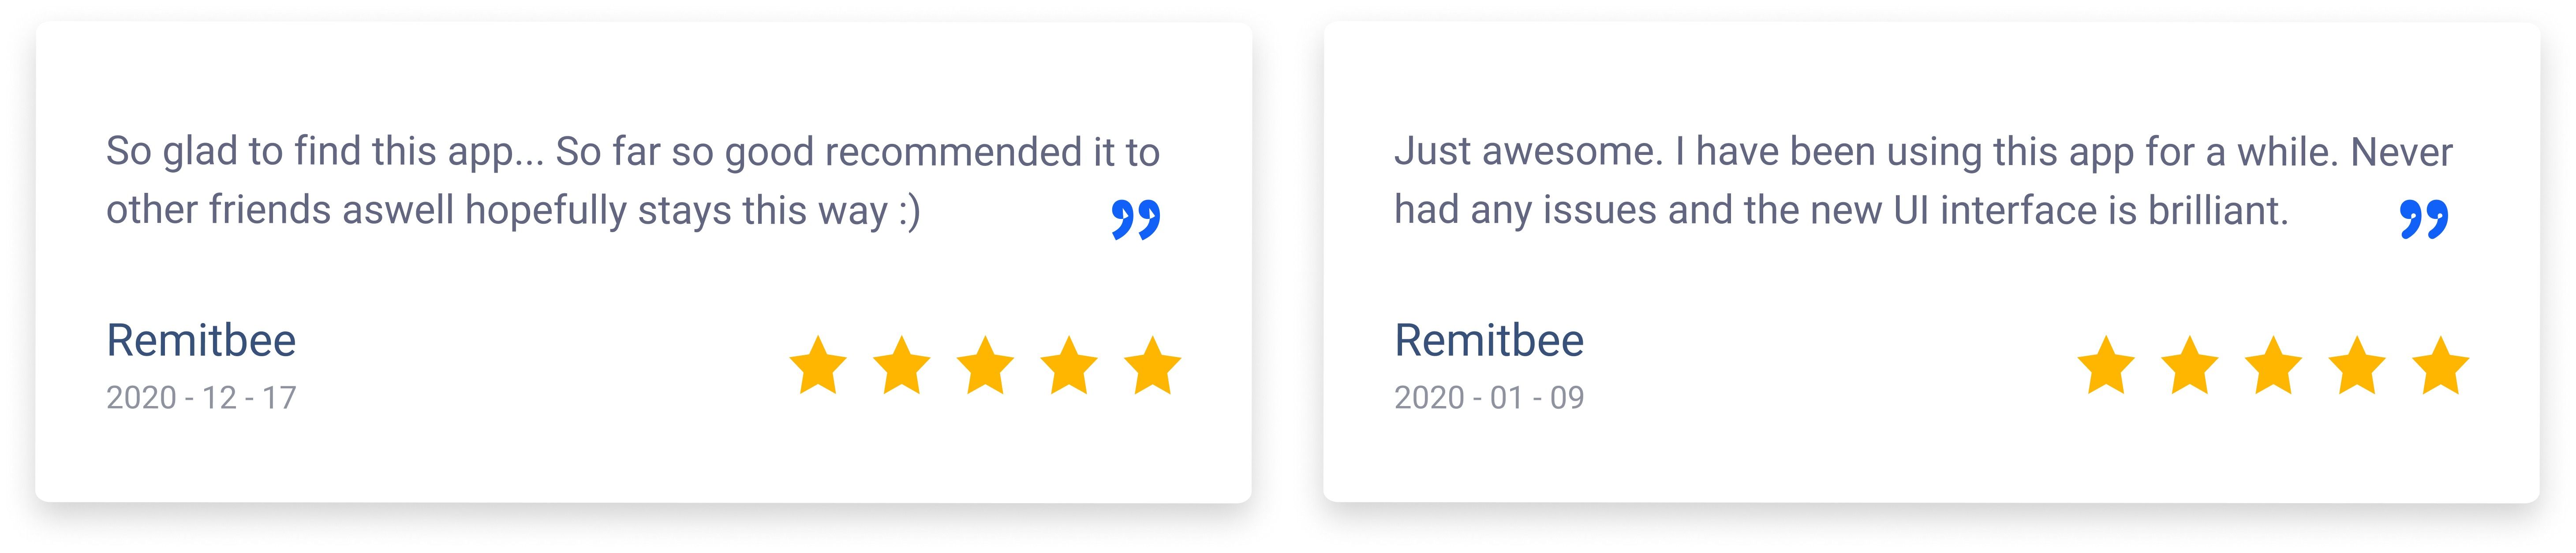 Remitbee Google reviews